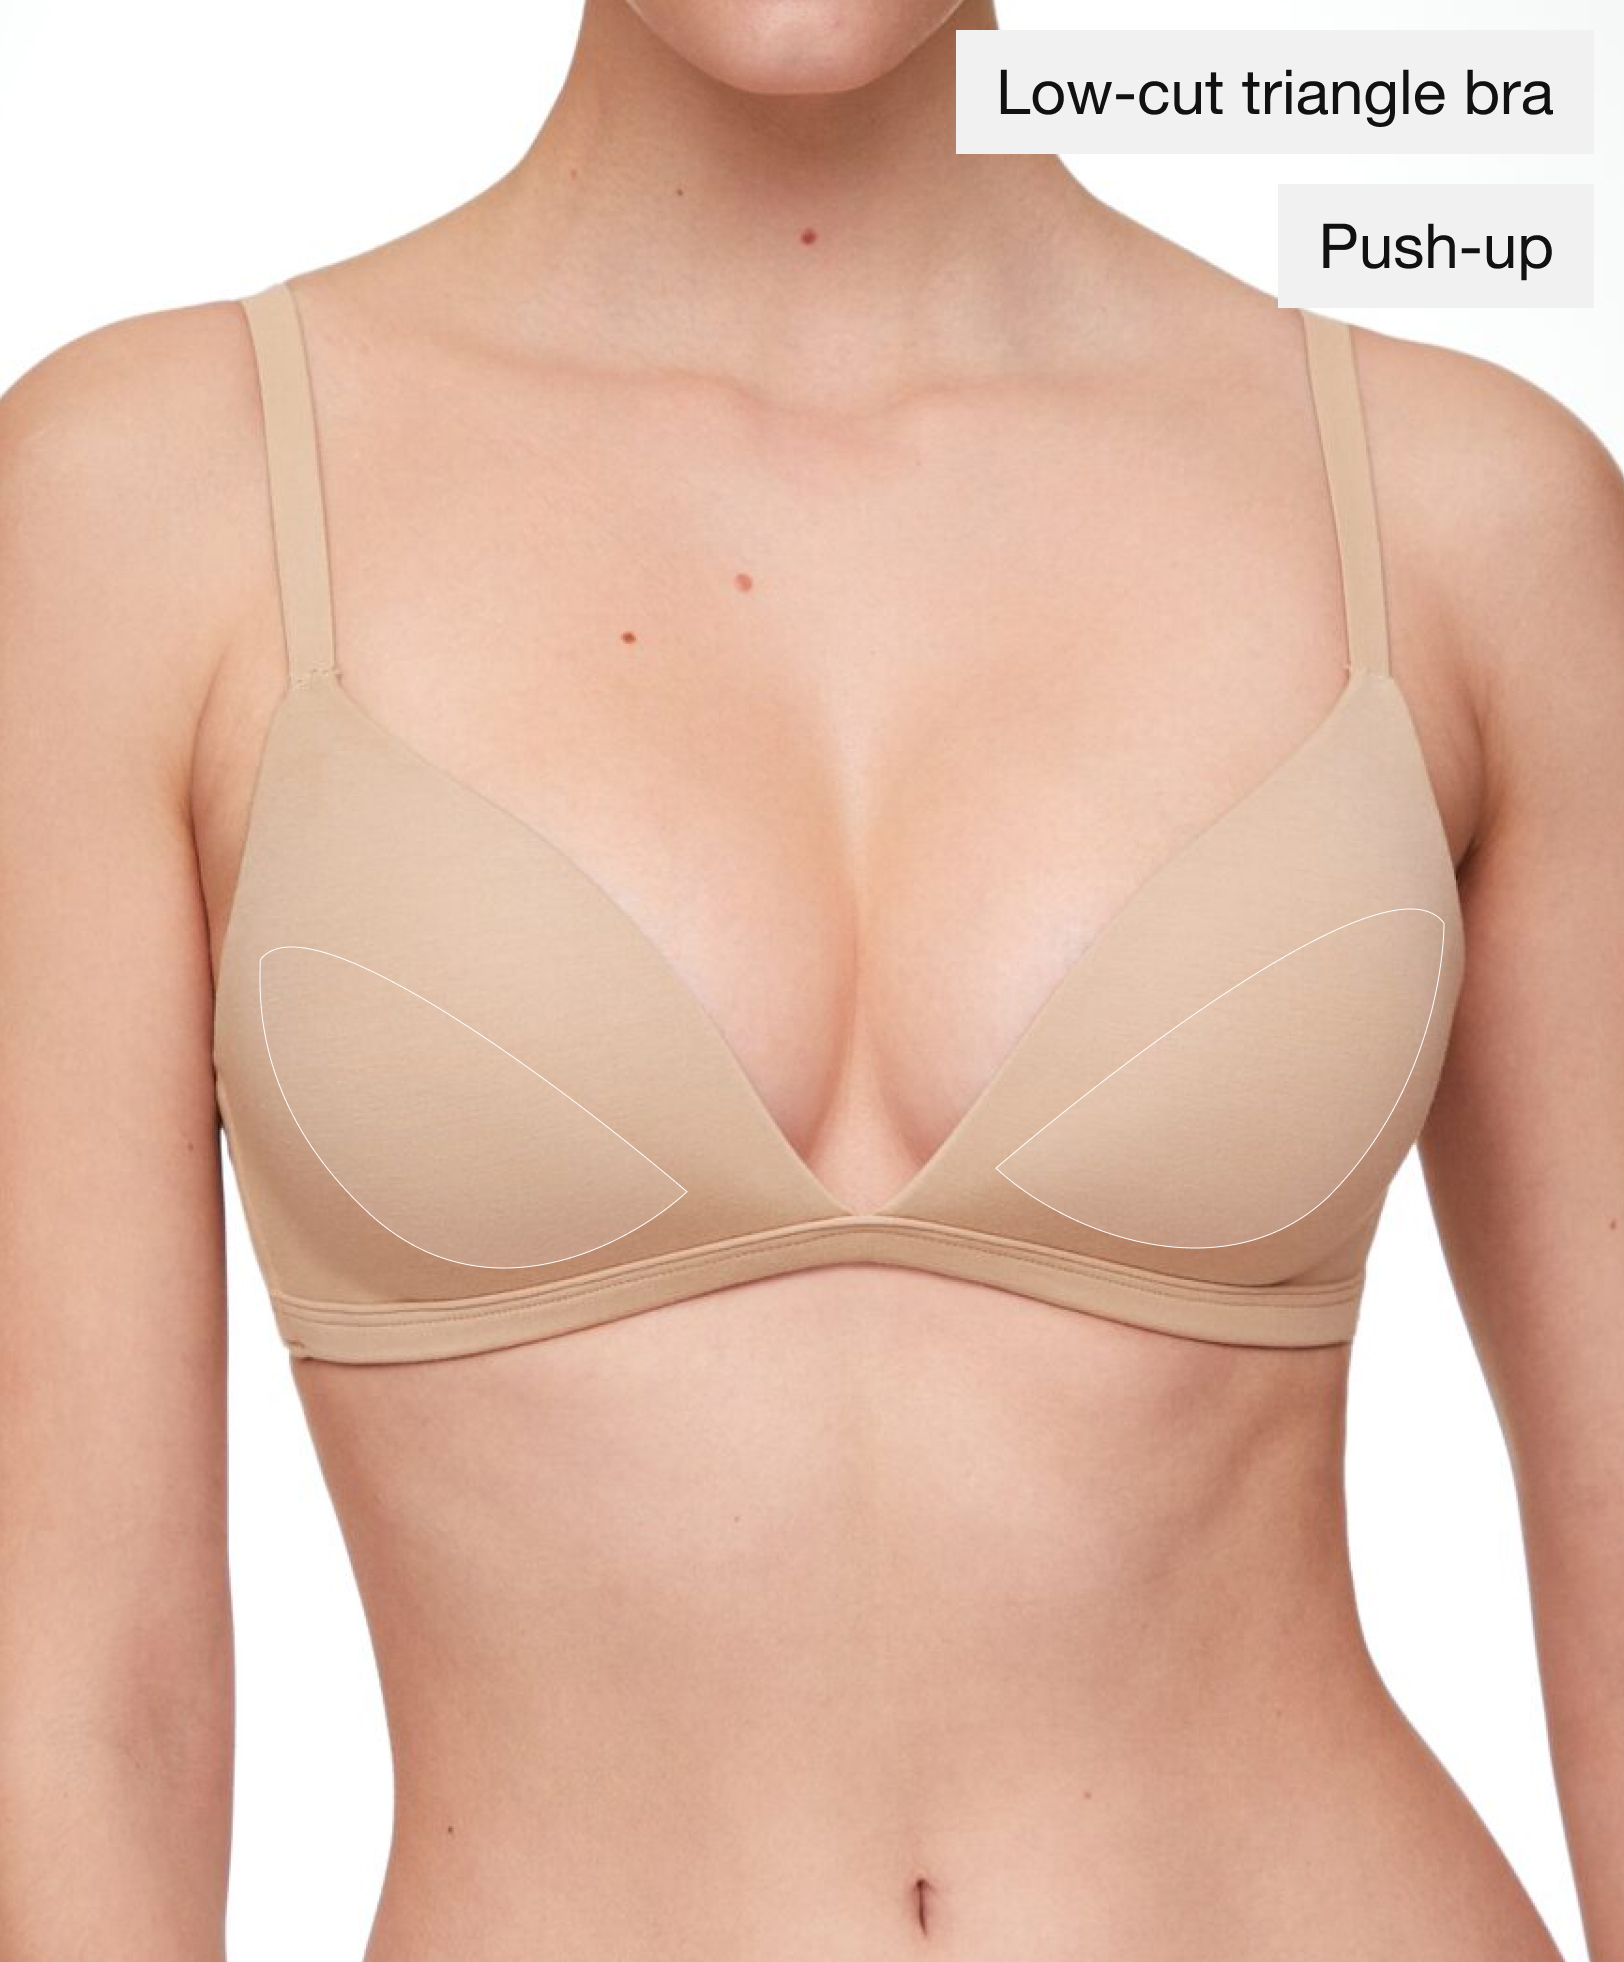 Cotton push-up triangle bra